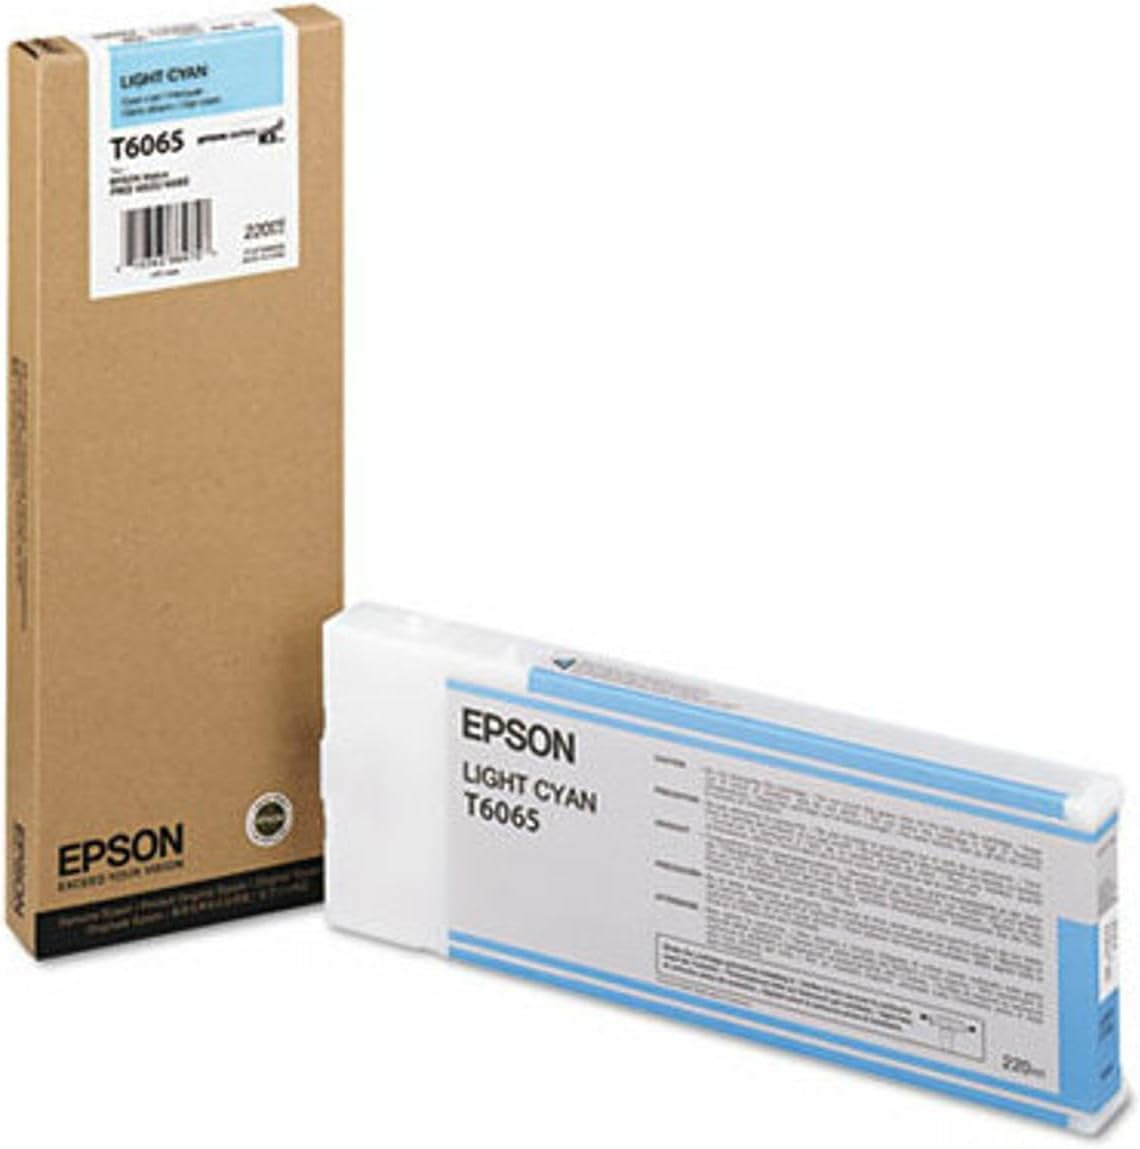 Epson Ultrachrome K3 Ink Cartridge - 220Ml Light Cyan (T606500)